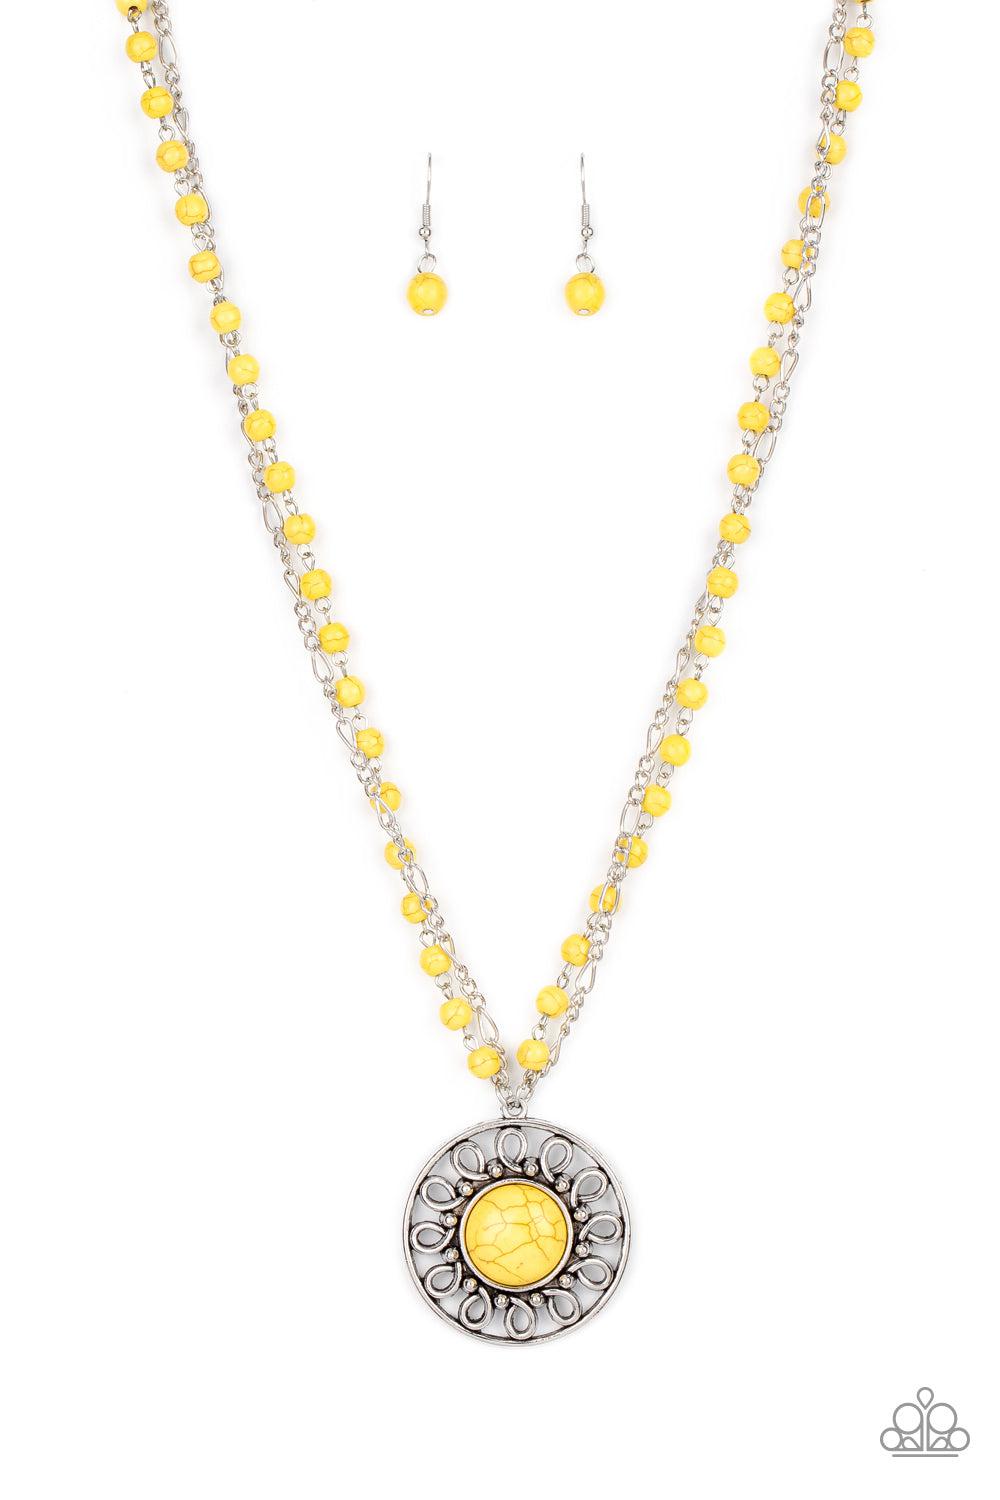 Sahara Suburb Yellow Stone Necklace - Paparazzi Accessories- lightbox - CarasShop.com - $5 Jewelry by Cara Jewels